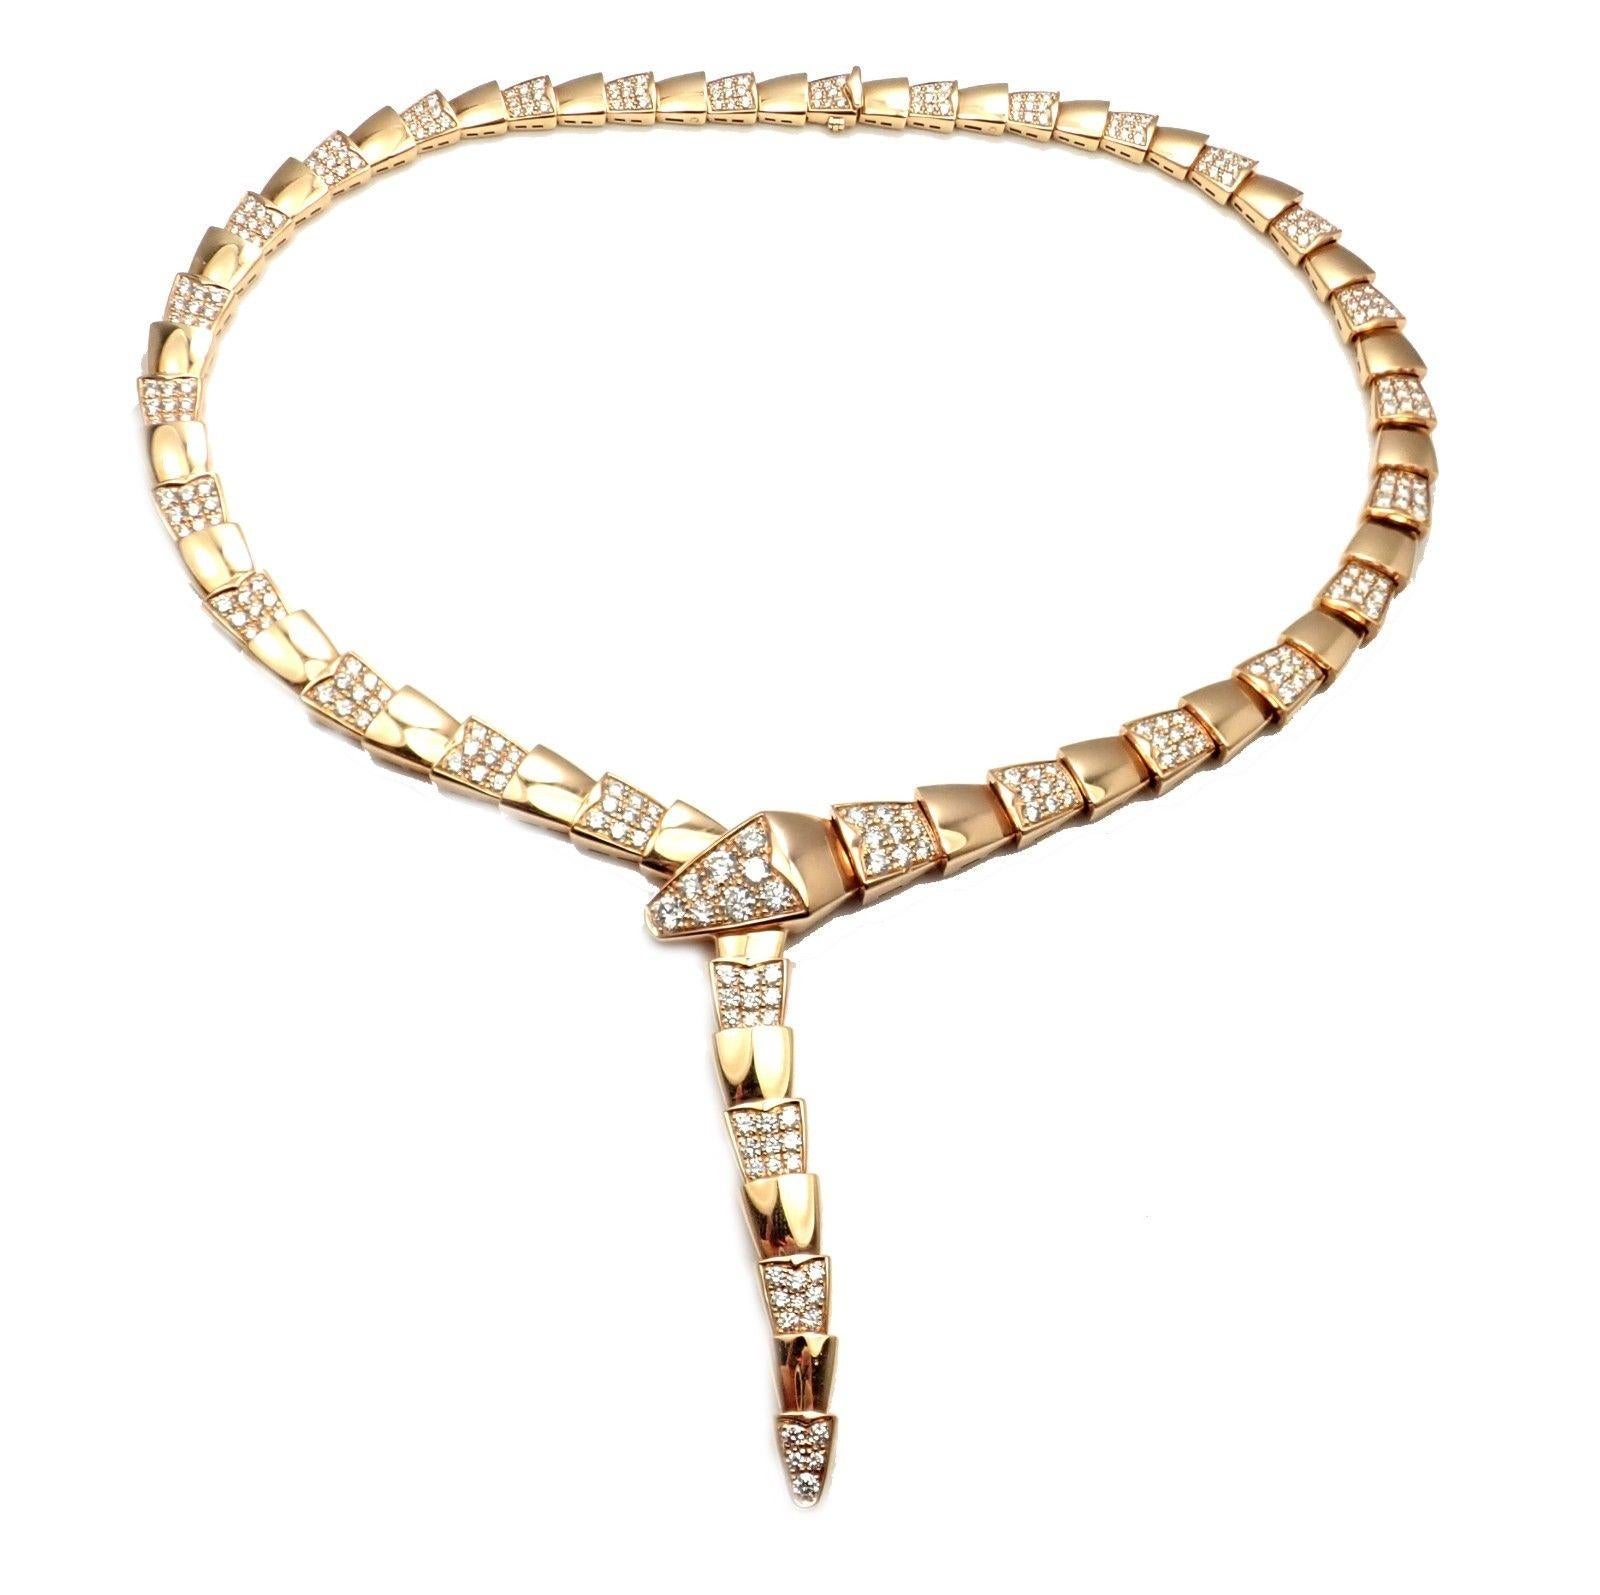 bulgari serpenti necklace gold price